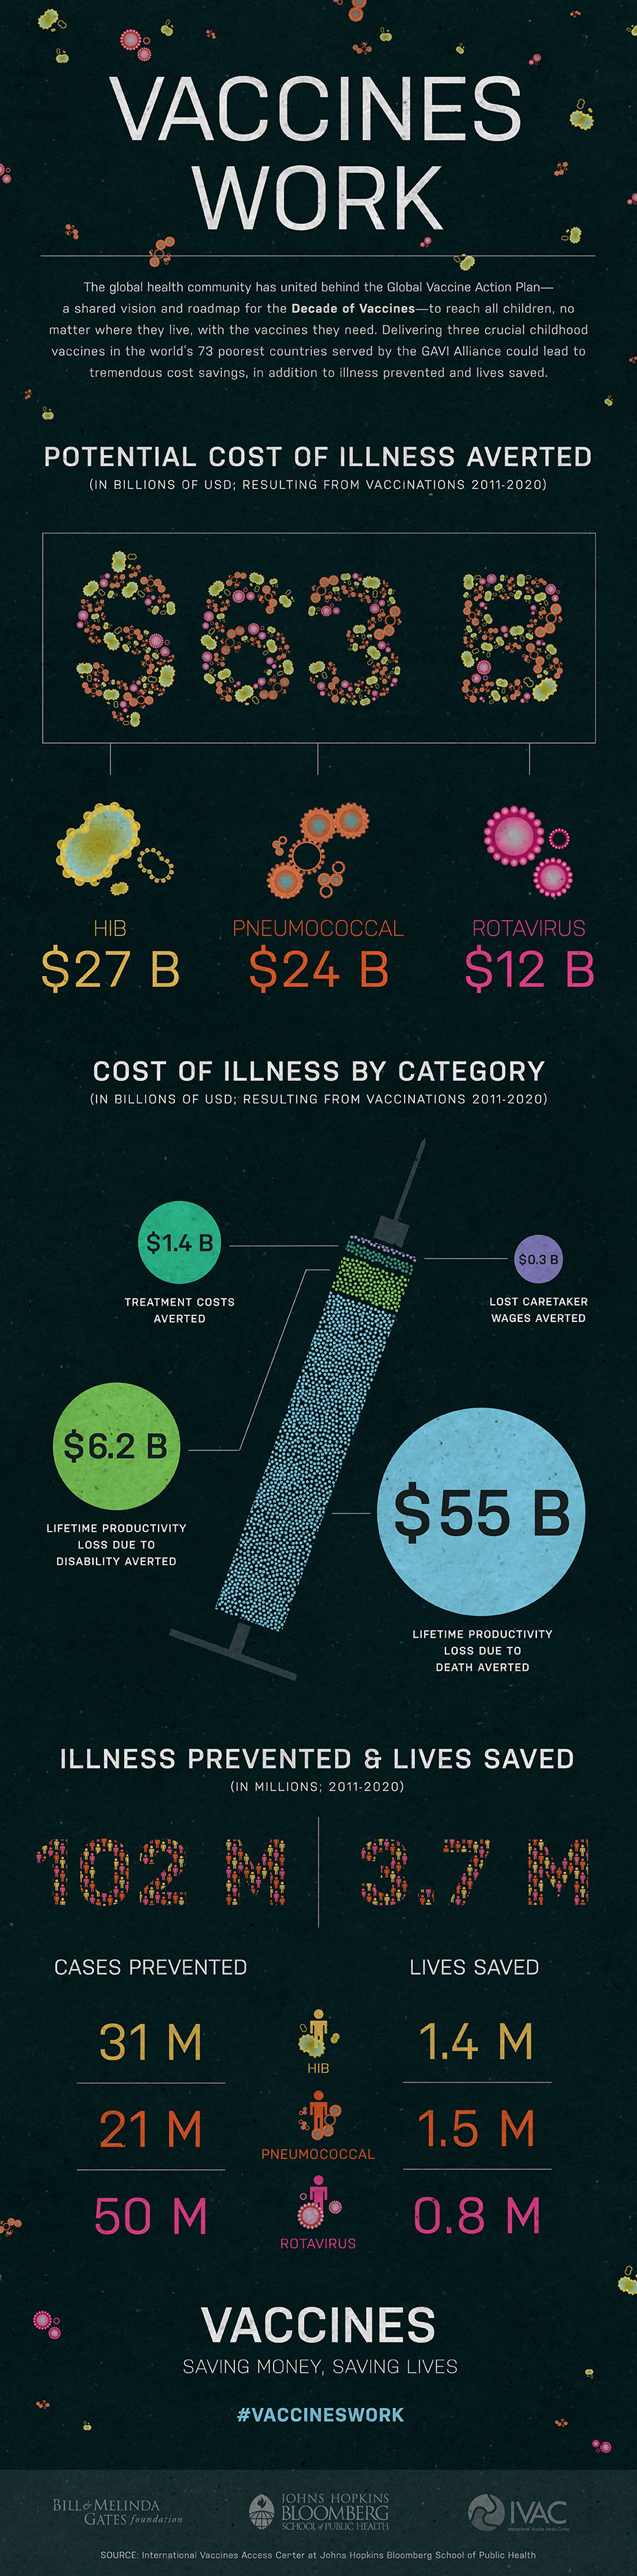 Vaccines_Cost-effectiveness_Infographic